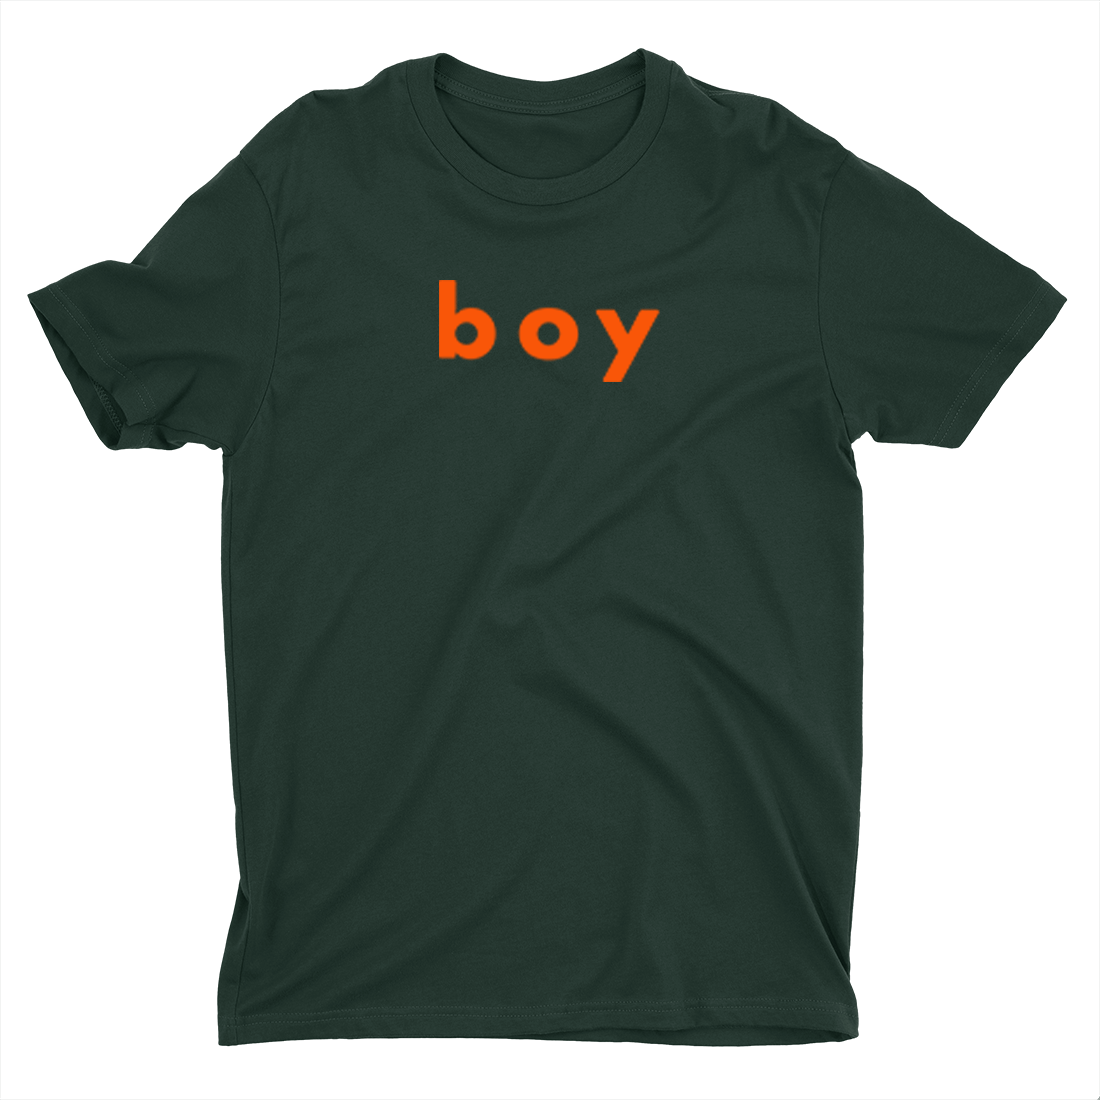 The Killers - Green  "boy" T-Shirt